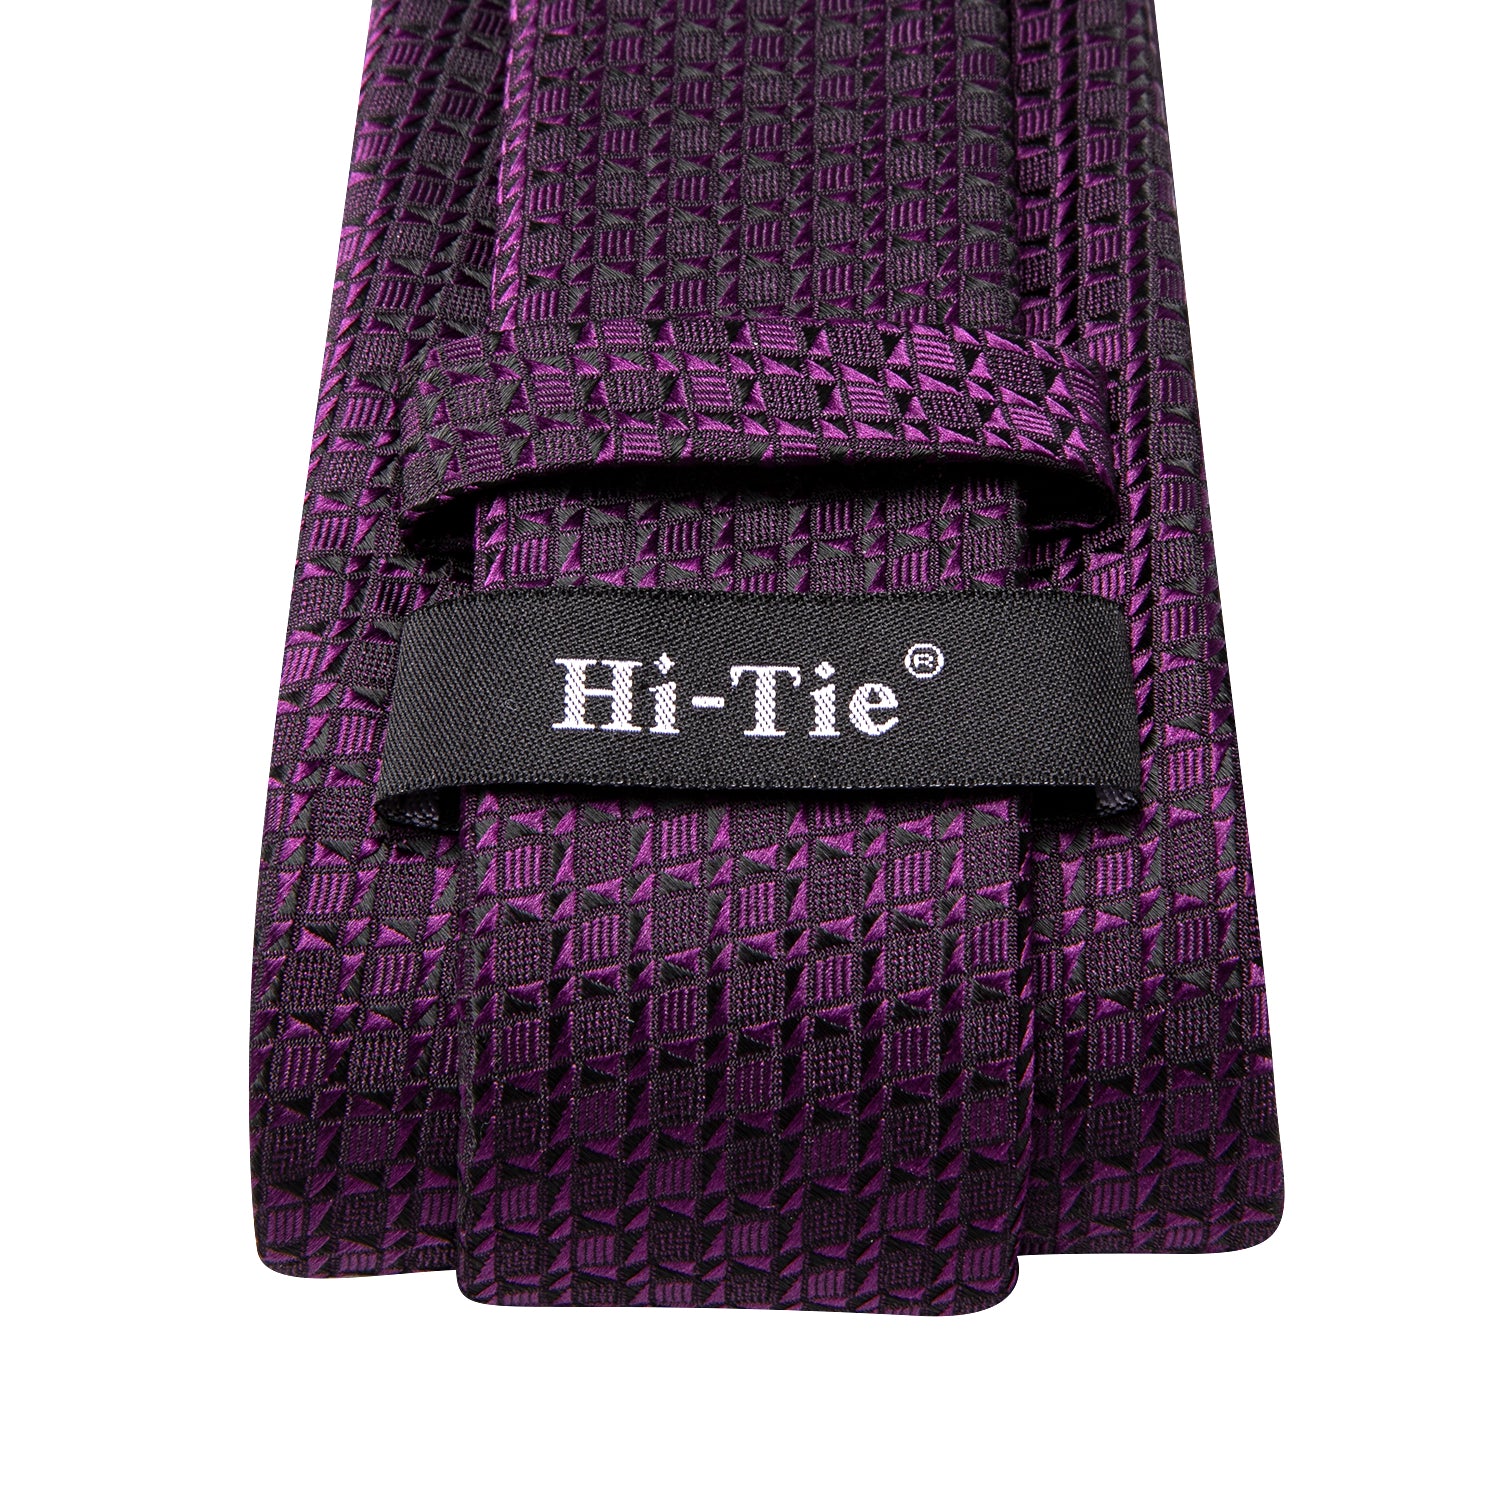 Hi-Tie Deep Purple Novelty Men's Tie Pocket Square Cufflinks Set